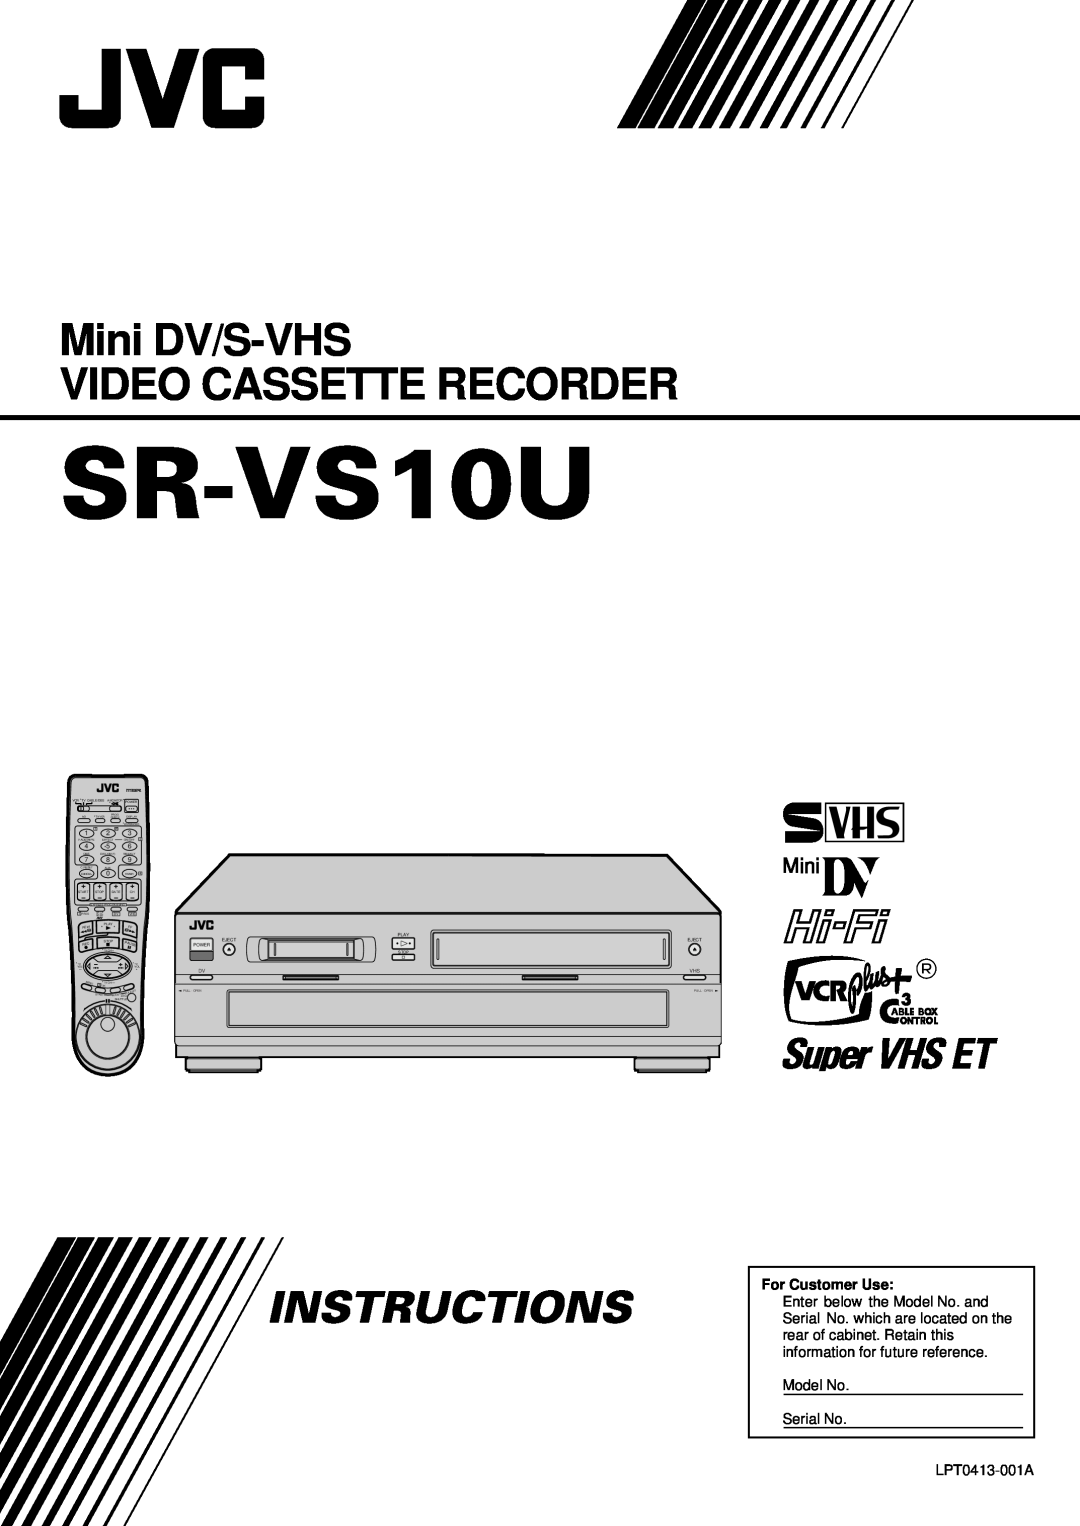 JVC SR-VS10U manual Mini DV/S-VHS VIDEO CASSETTE RECORDER, Instructions, For Customer Use, Model No Serial No 